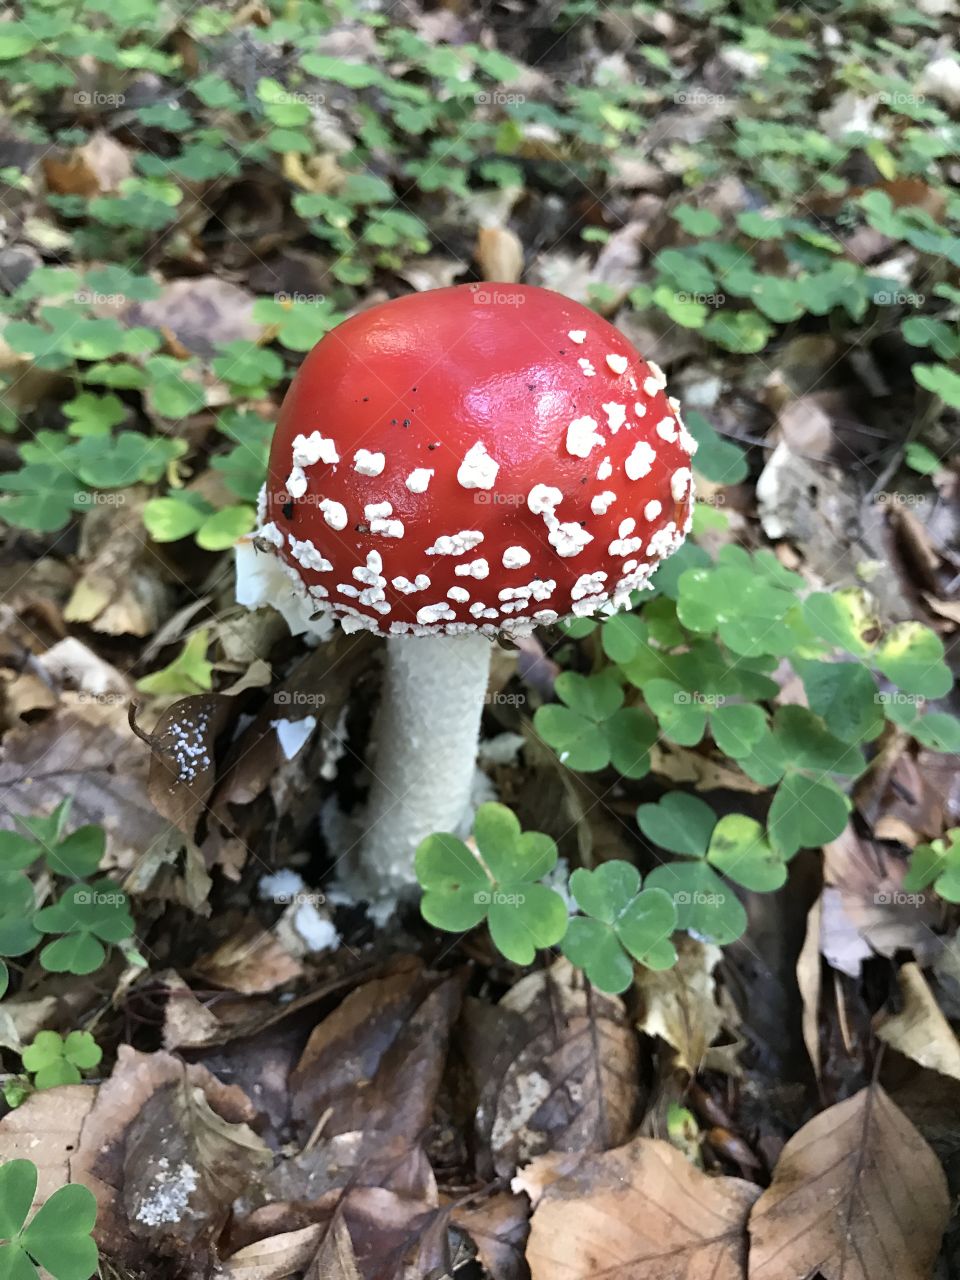 Poisoning mushroom 